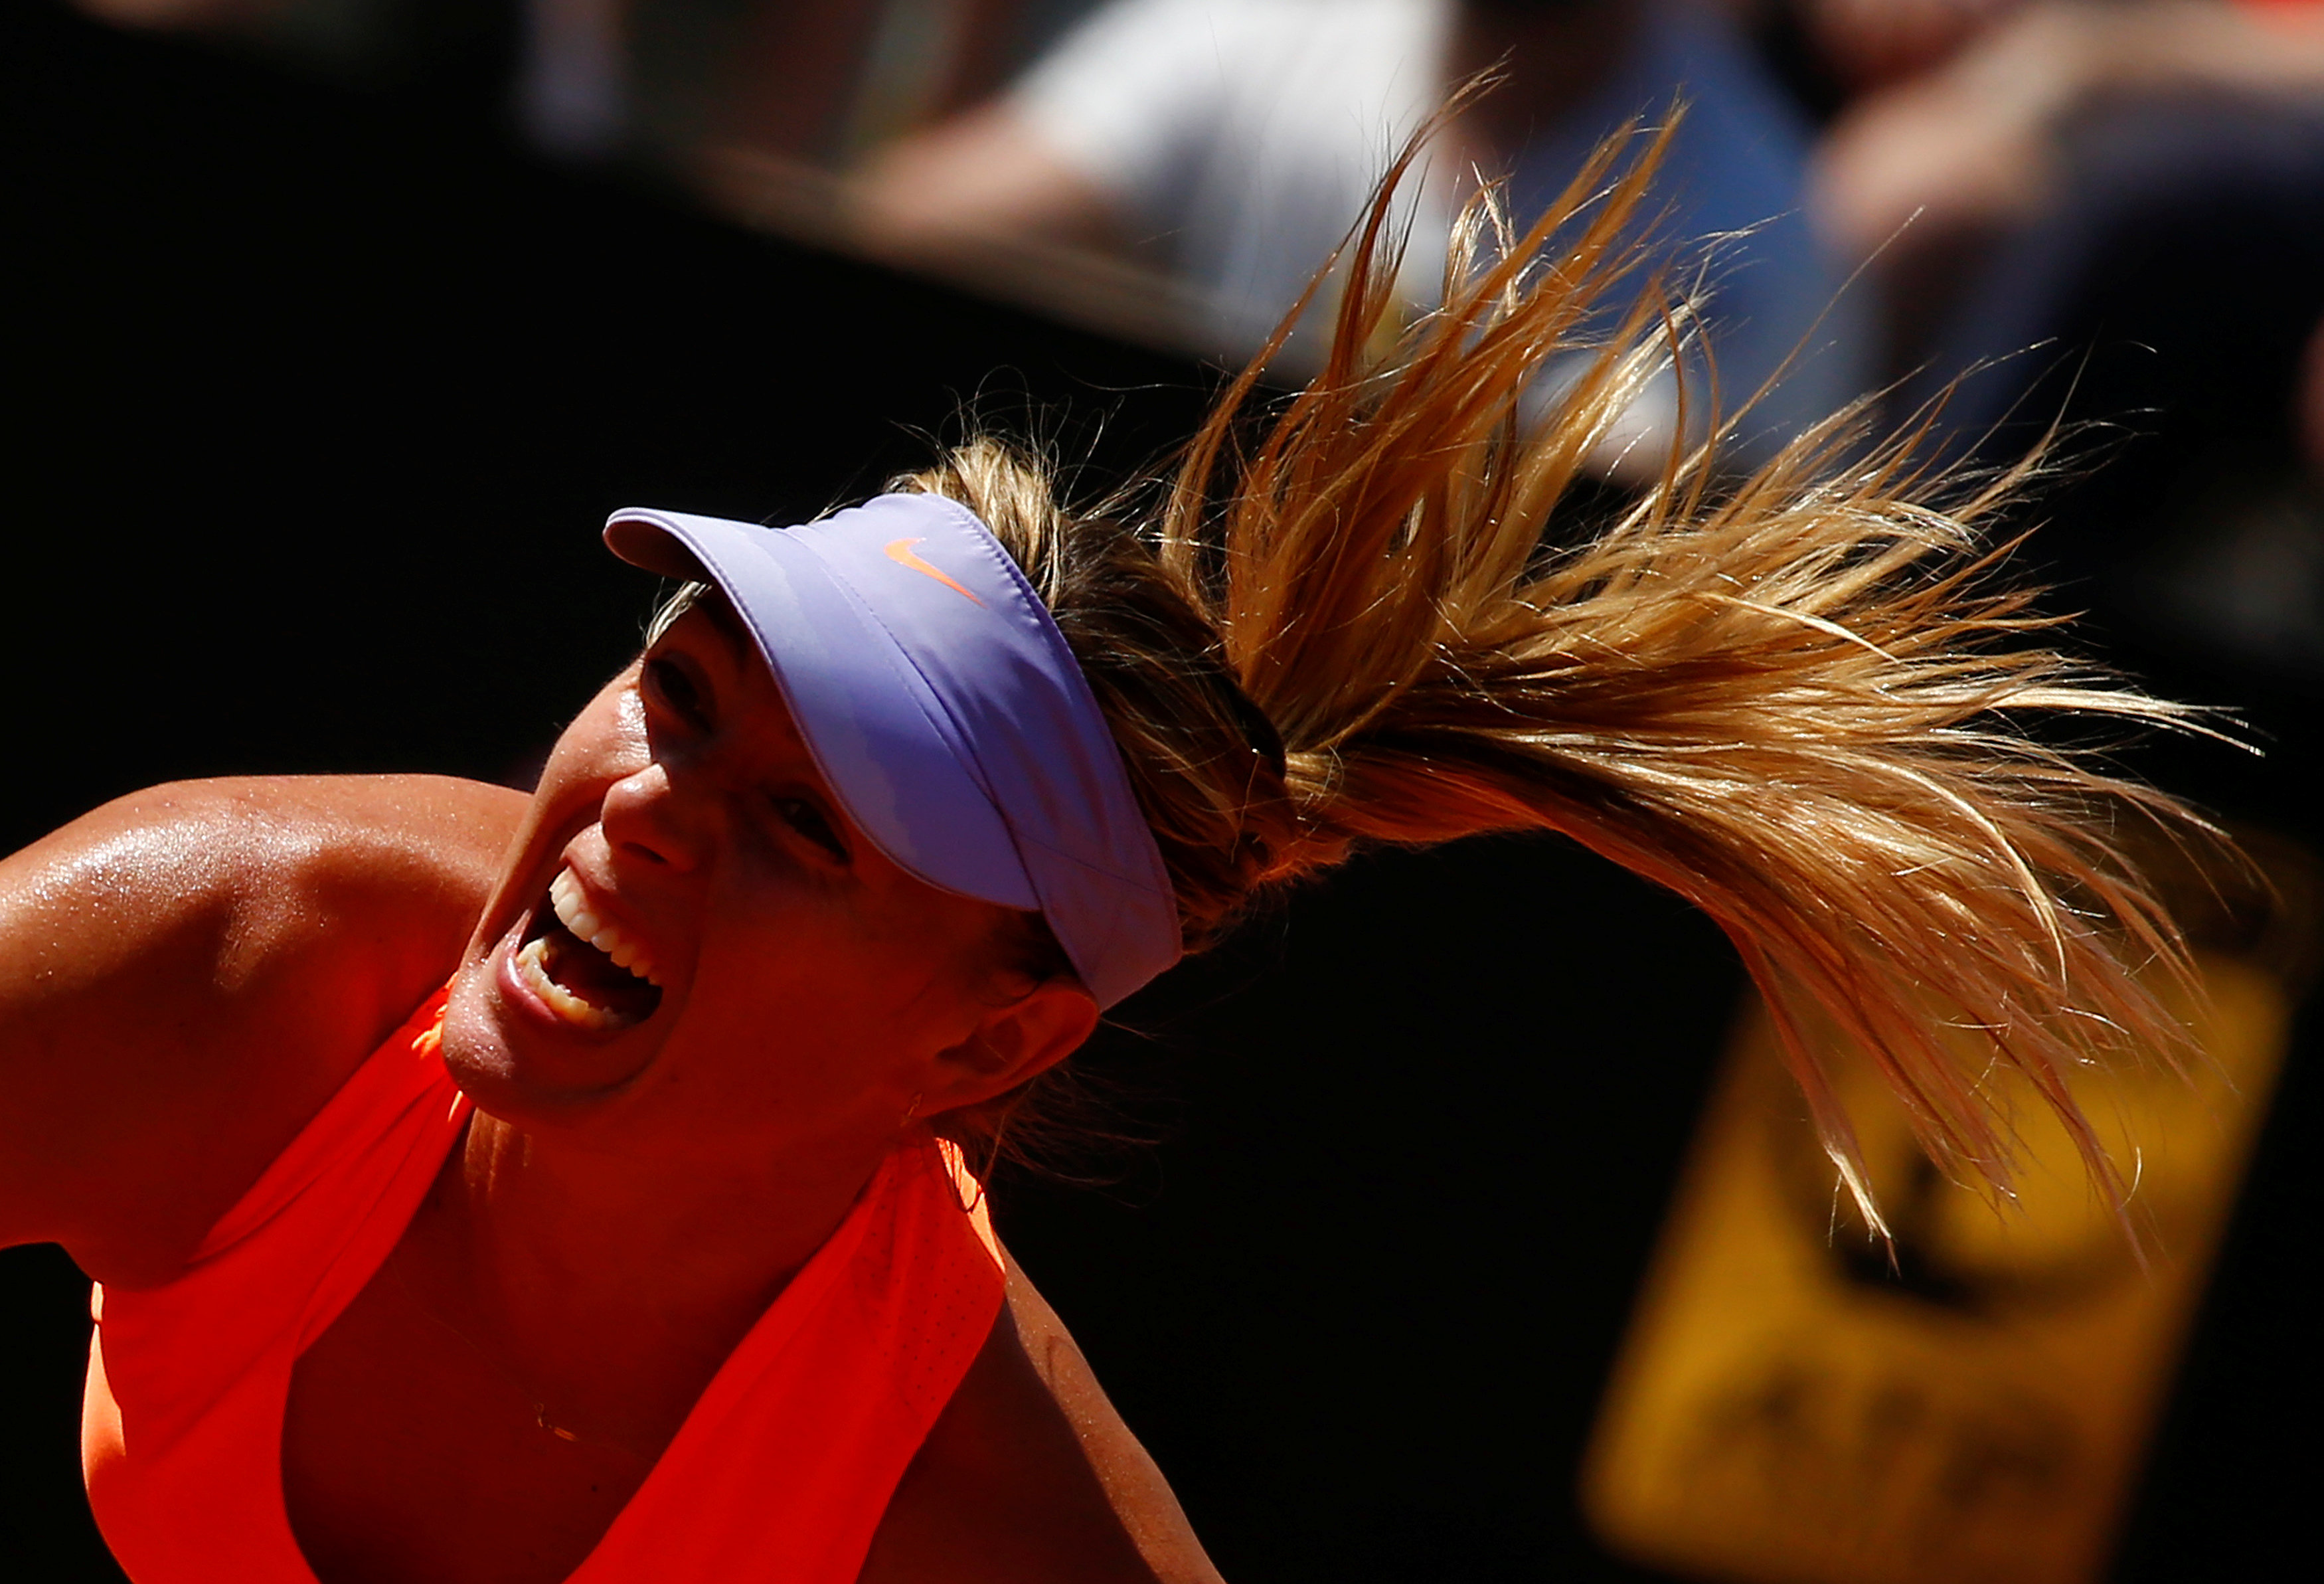 Tennis: Sharapova denied French Open wildcard